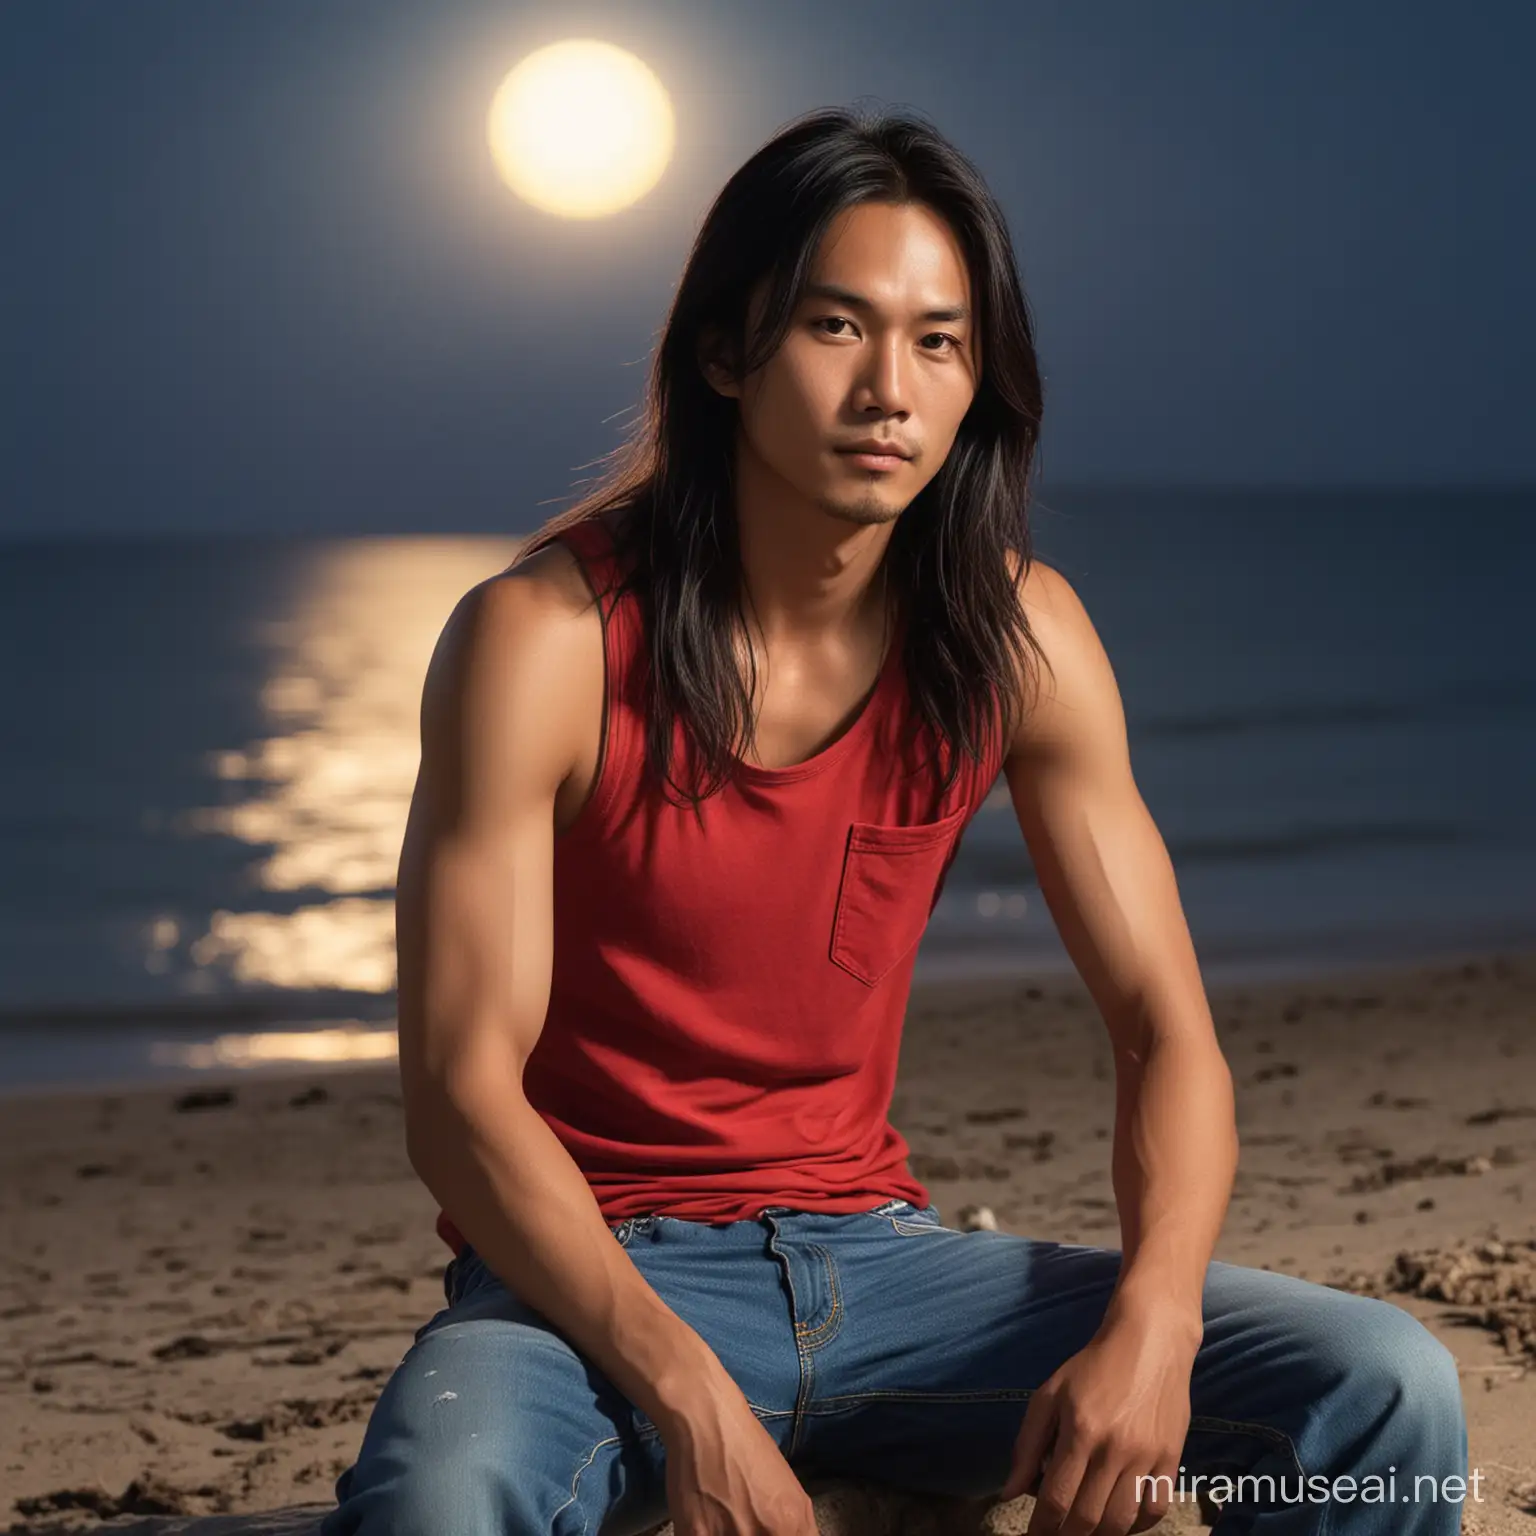 Gambar seorang lelaki asia rambut gondrong memakai singled warna merah dan celana jeans sedang duduk di tepi pantai terang bulan malam hari ,dan sangat detail, sangat jernih, resolusi tinggi, penuh warna.